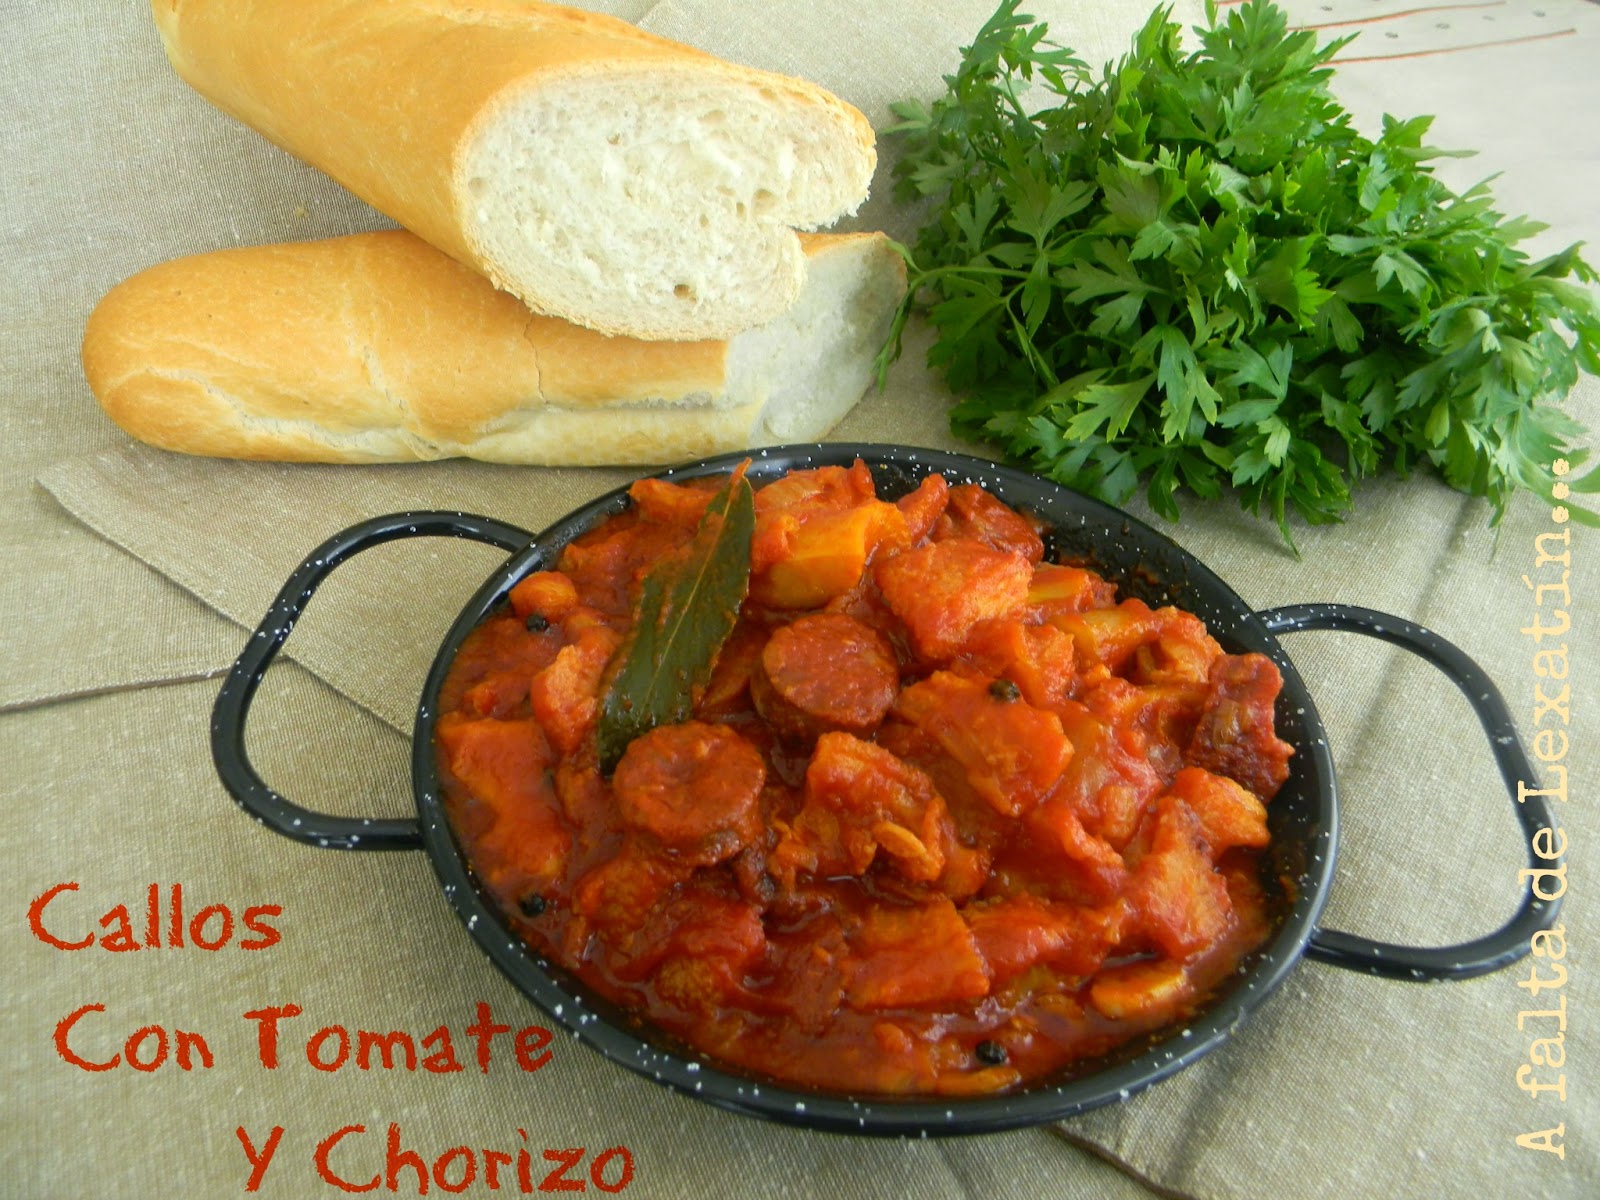 Callos Con Tomate Y Chorizo
